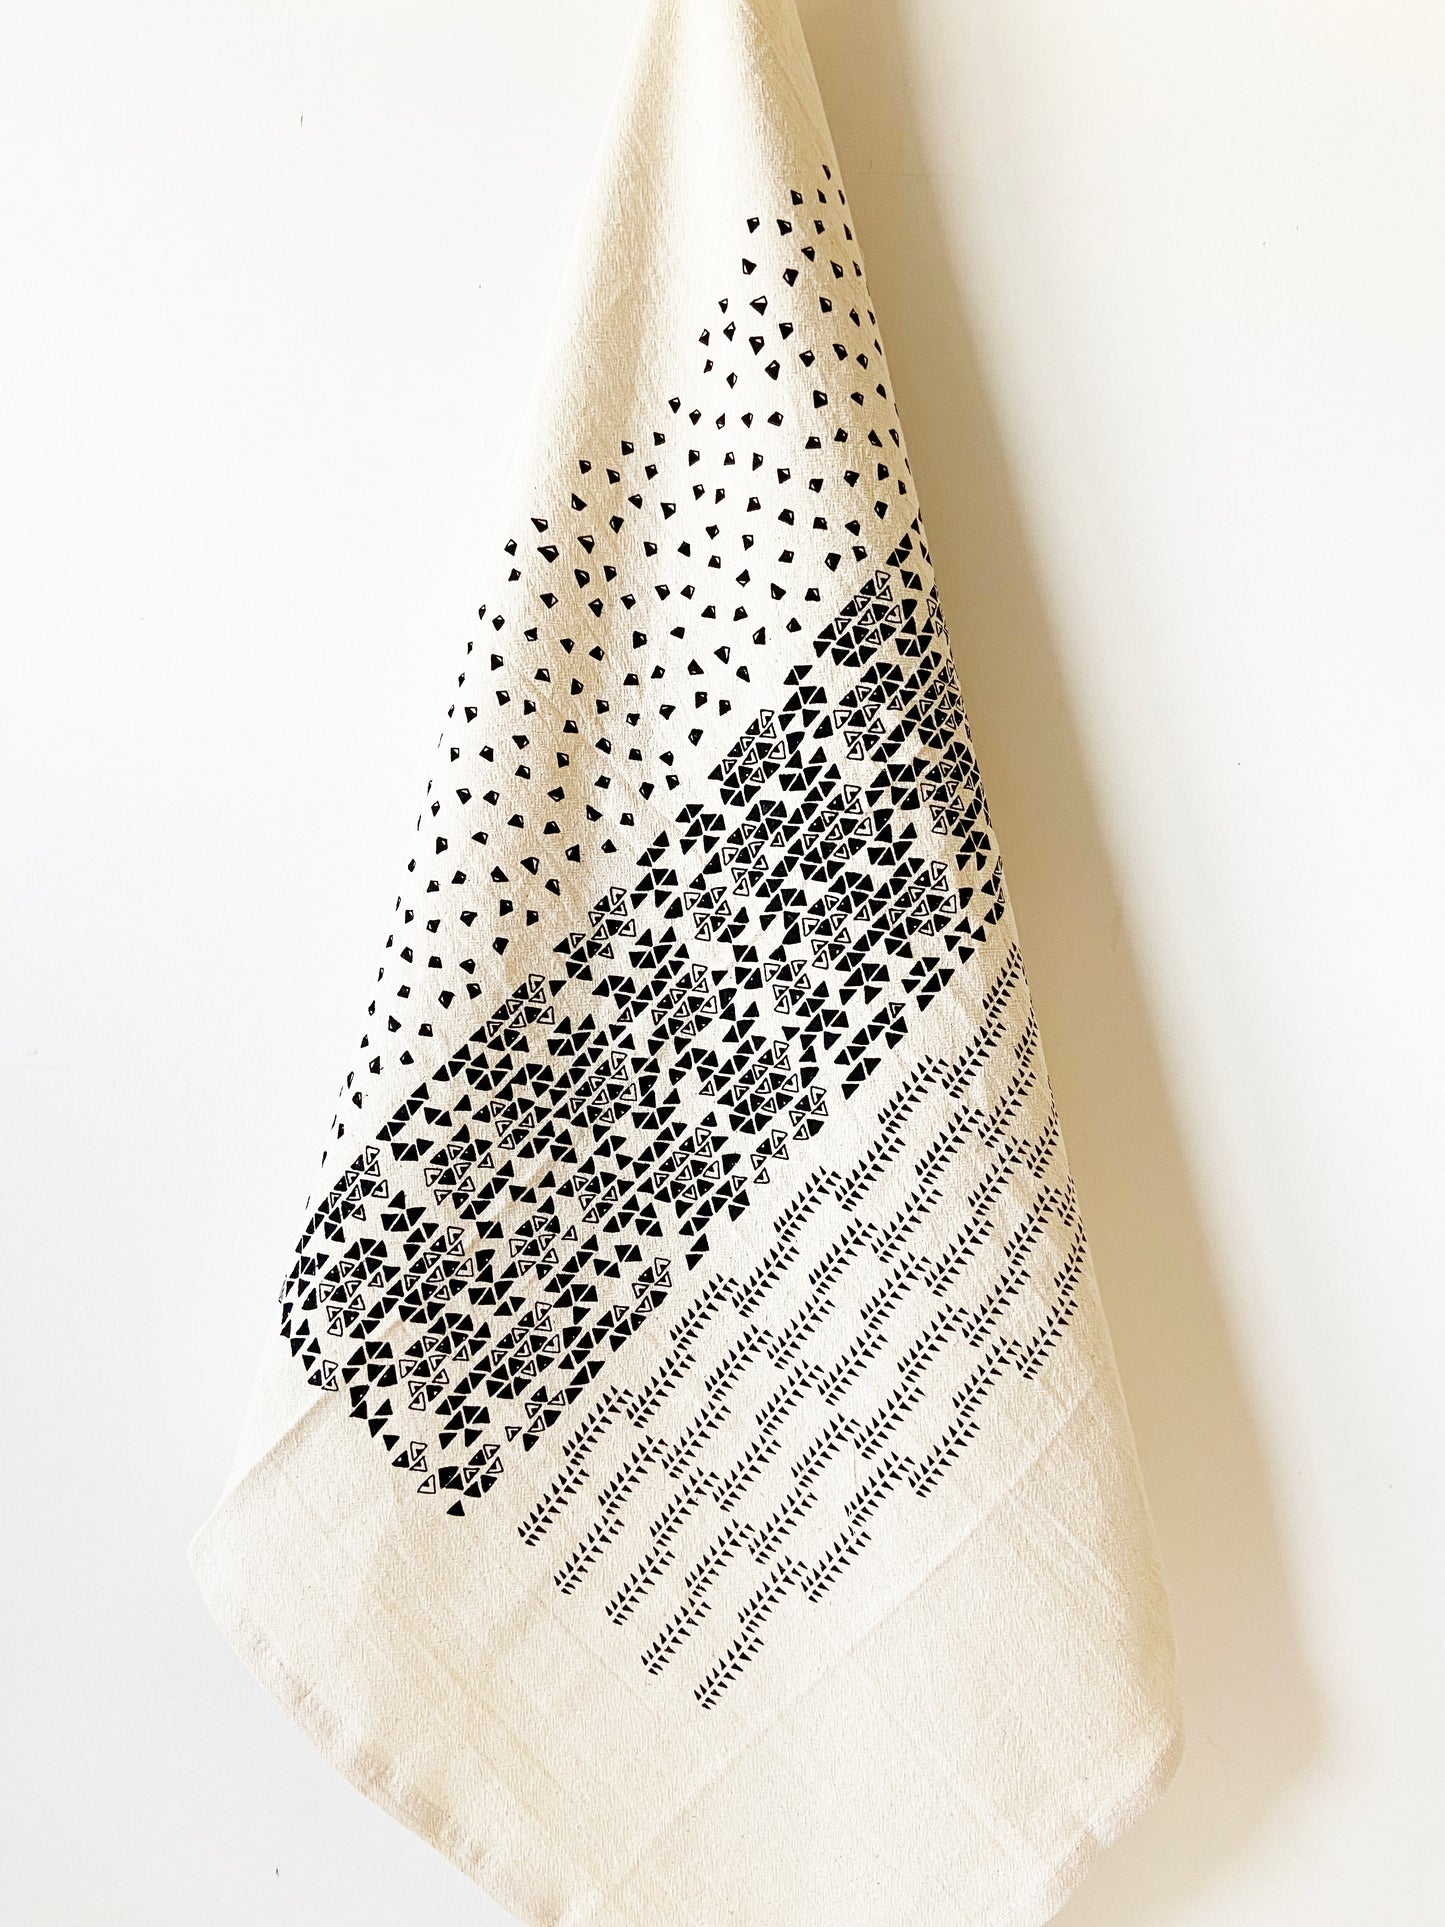 Triangle Abstract Hand Printed Organic Tea Towel